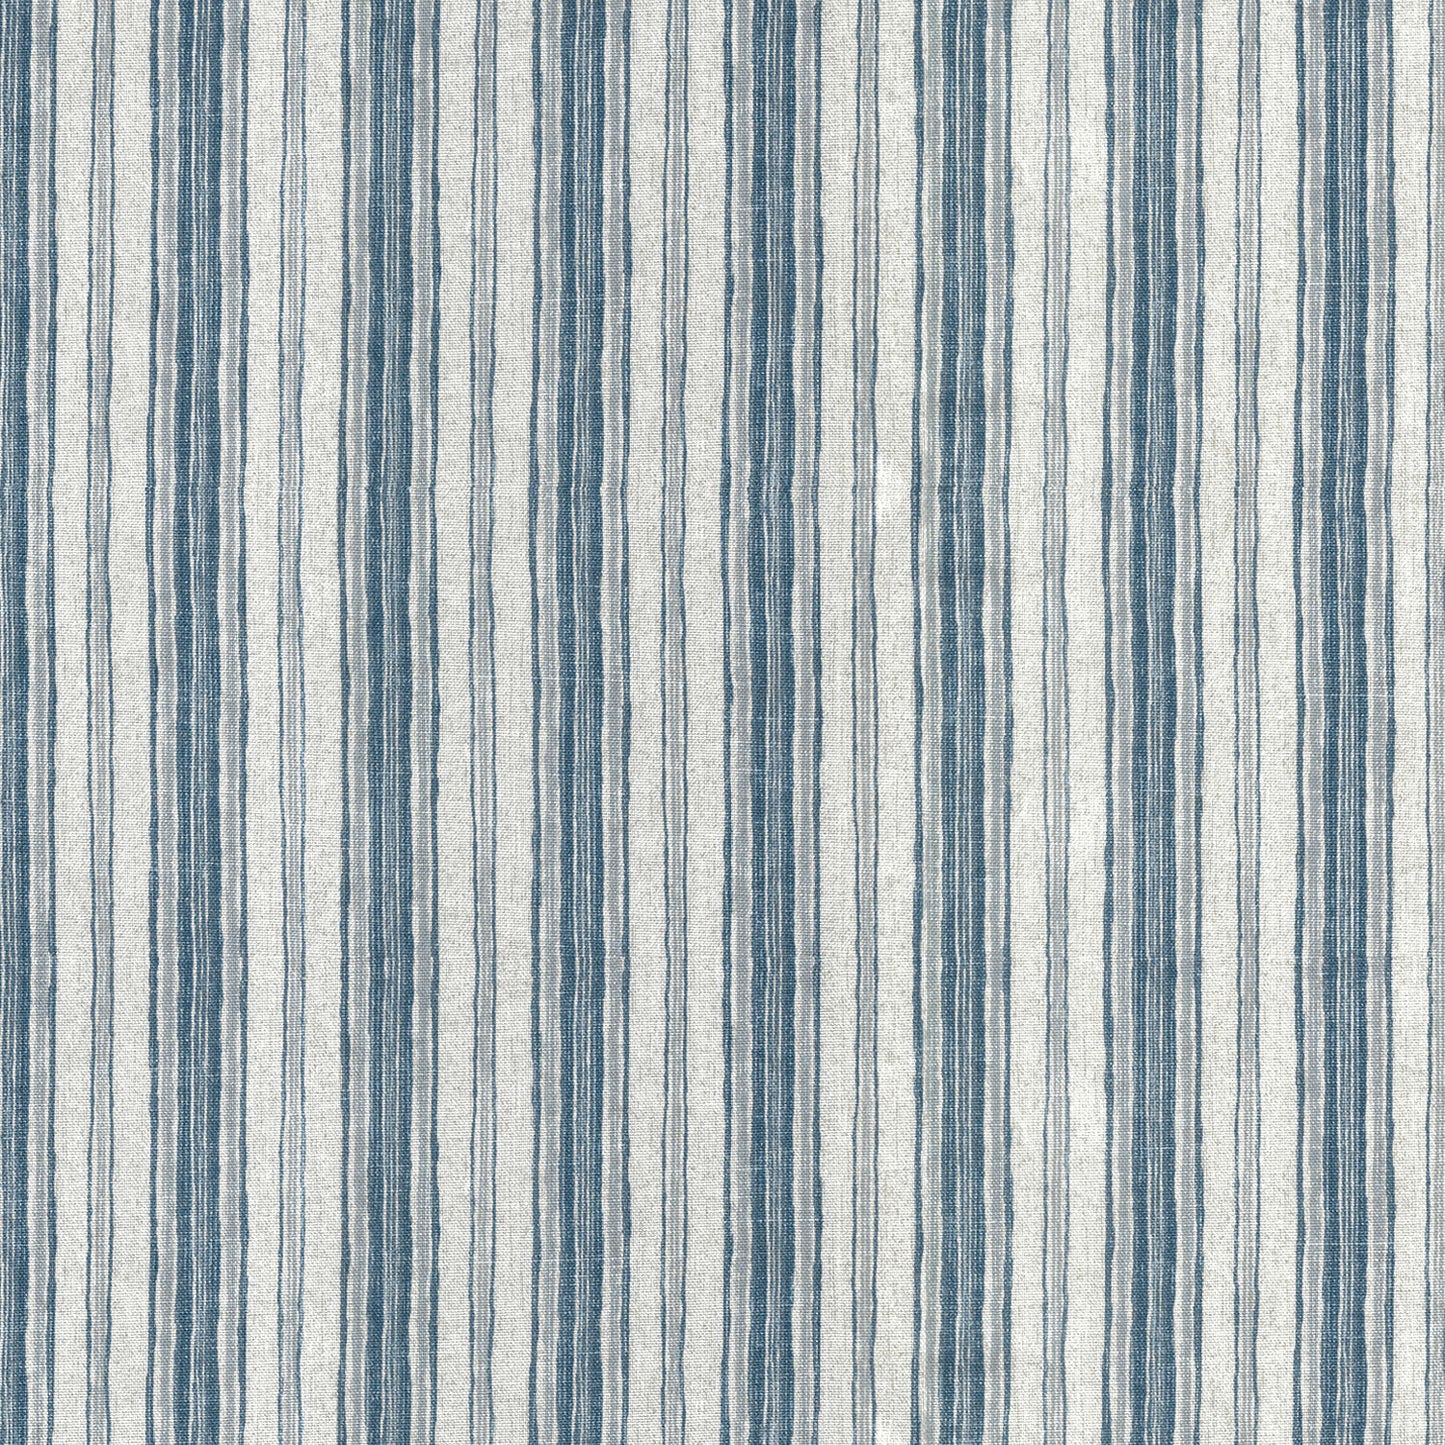 rod pocket curtains in brunswick denim blue stripe